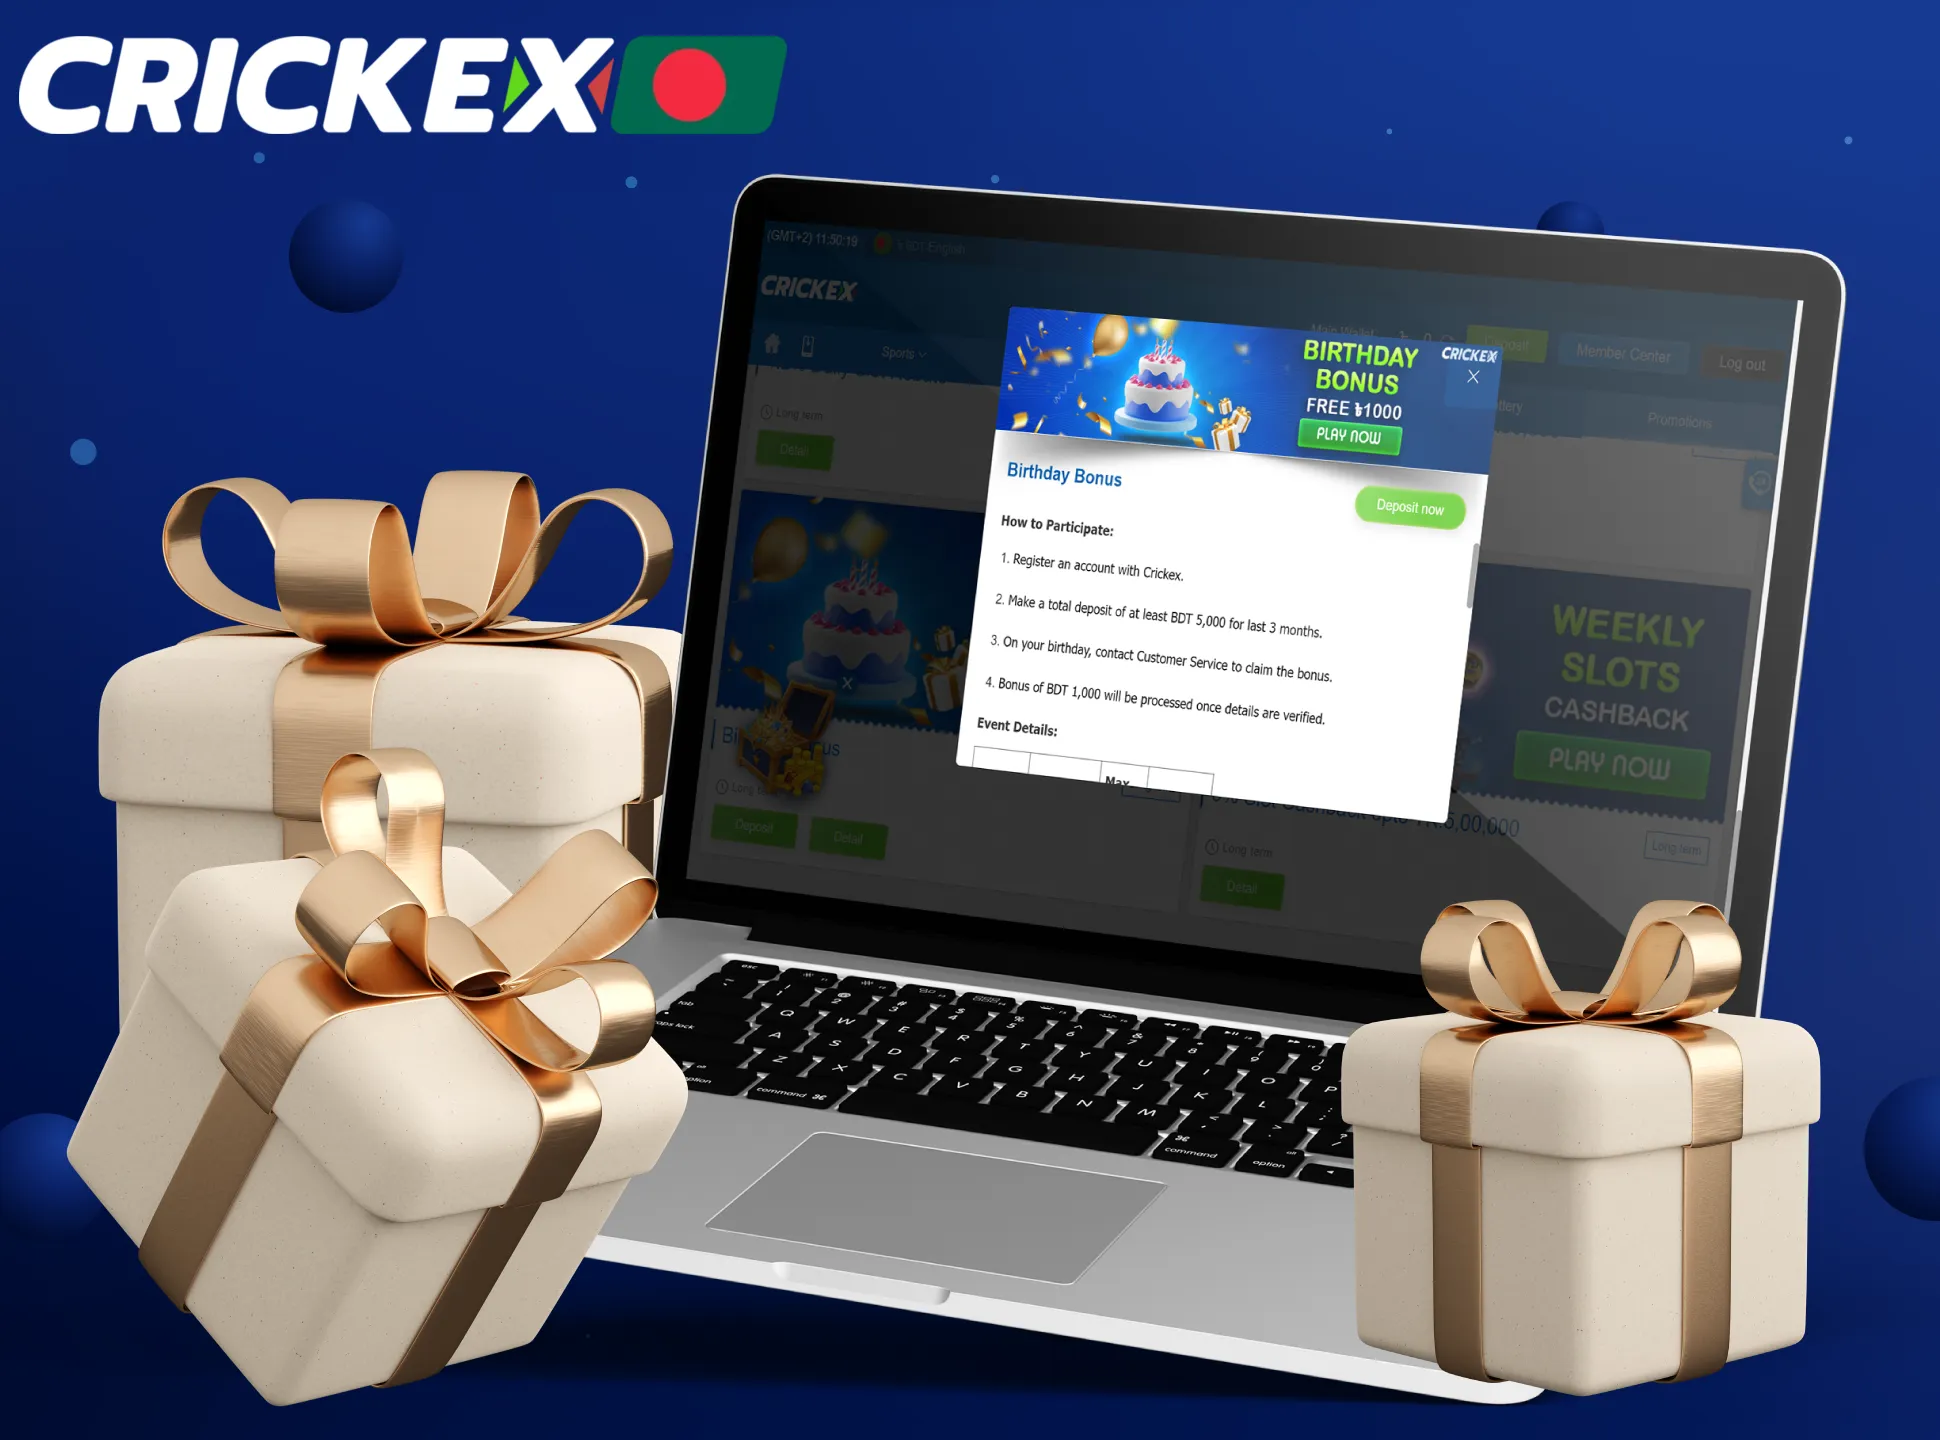 Crickex provides a birthday bonus for volleyball betting.